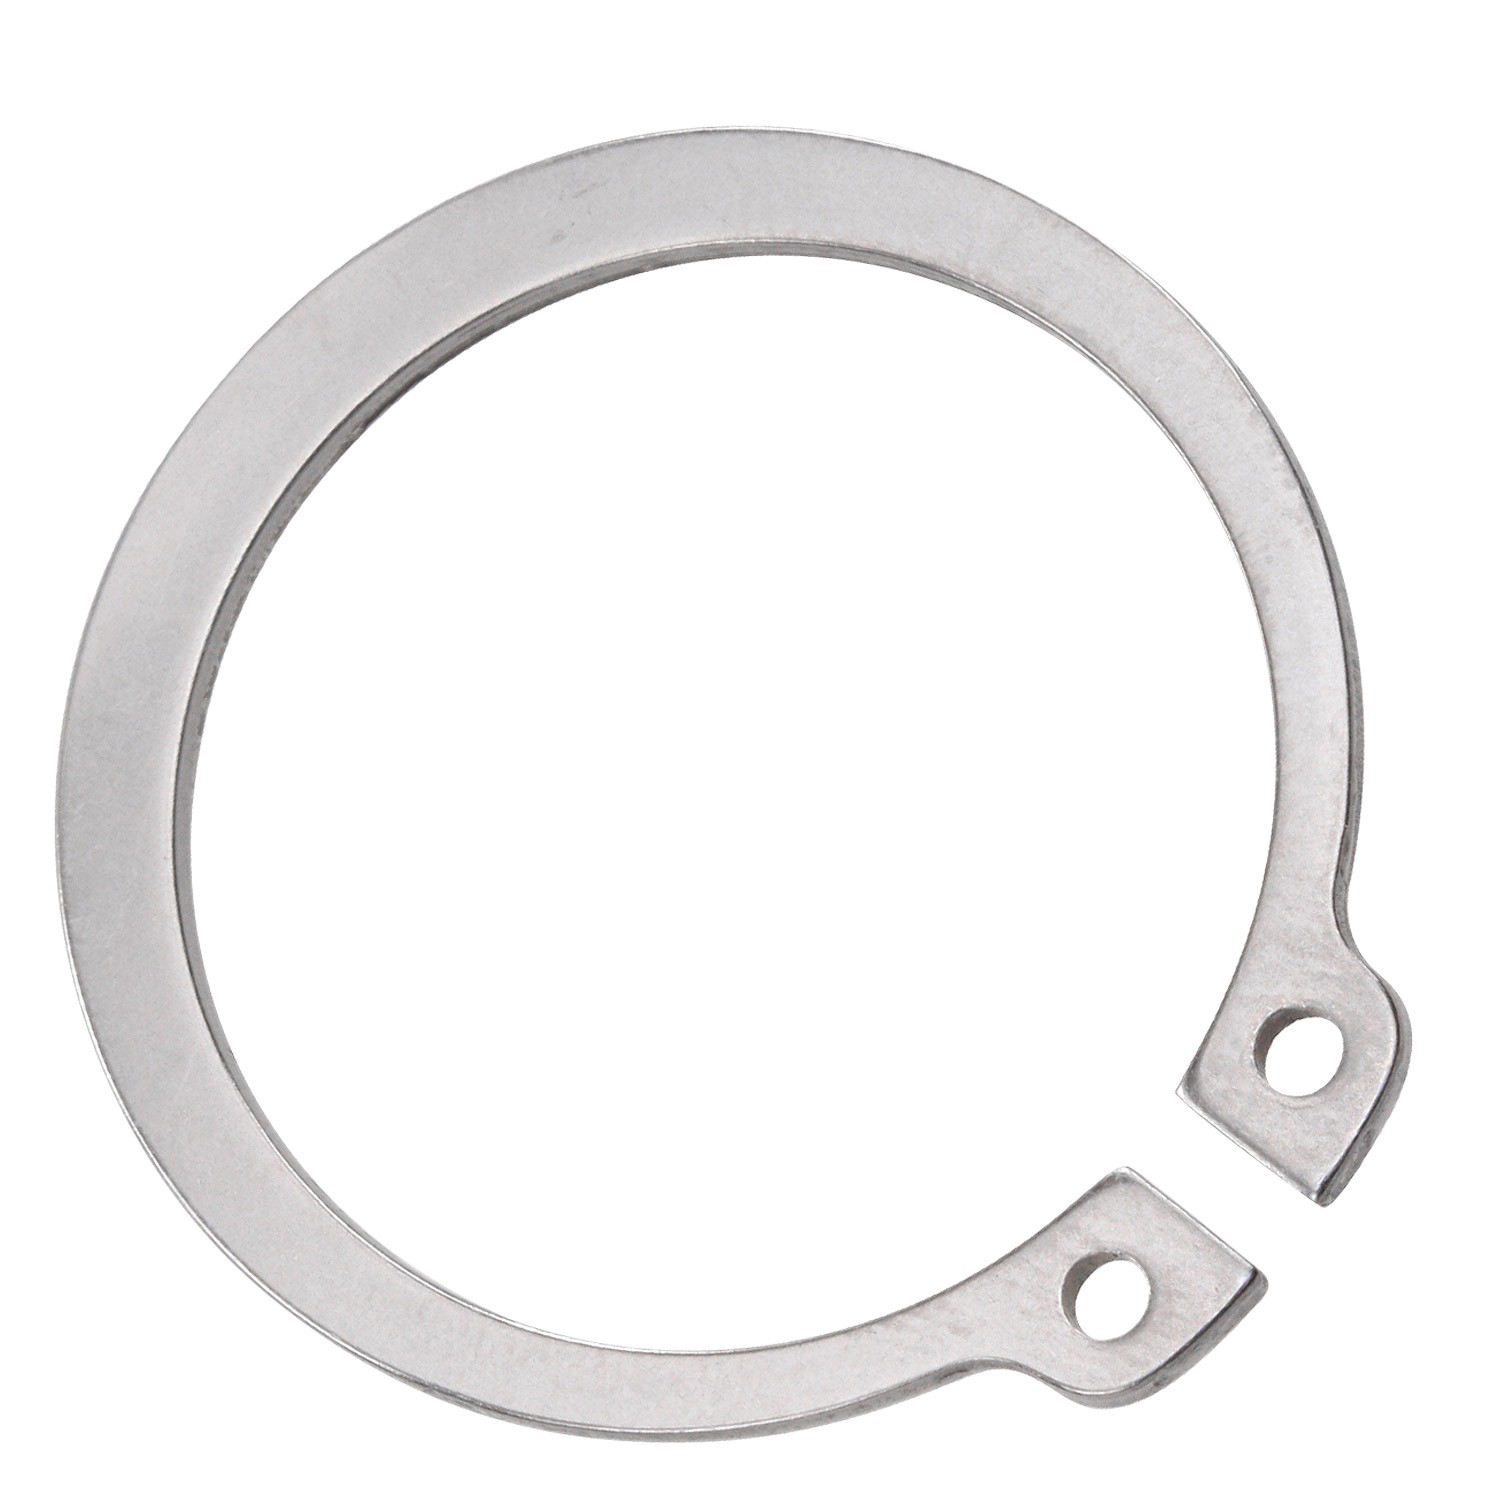 Кольцо стопорное наружное 22х1,2 DIN 471, нержавеющая сталь A4 - фото